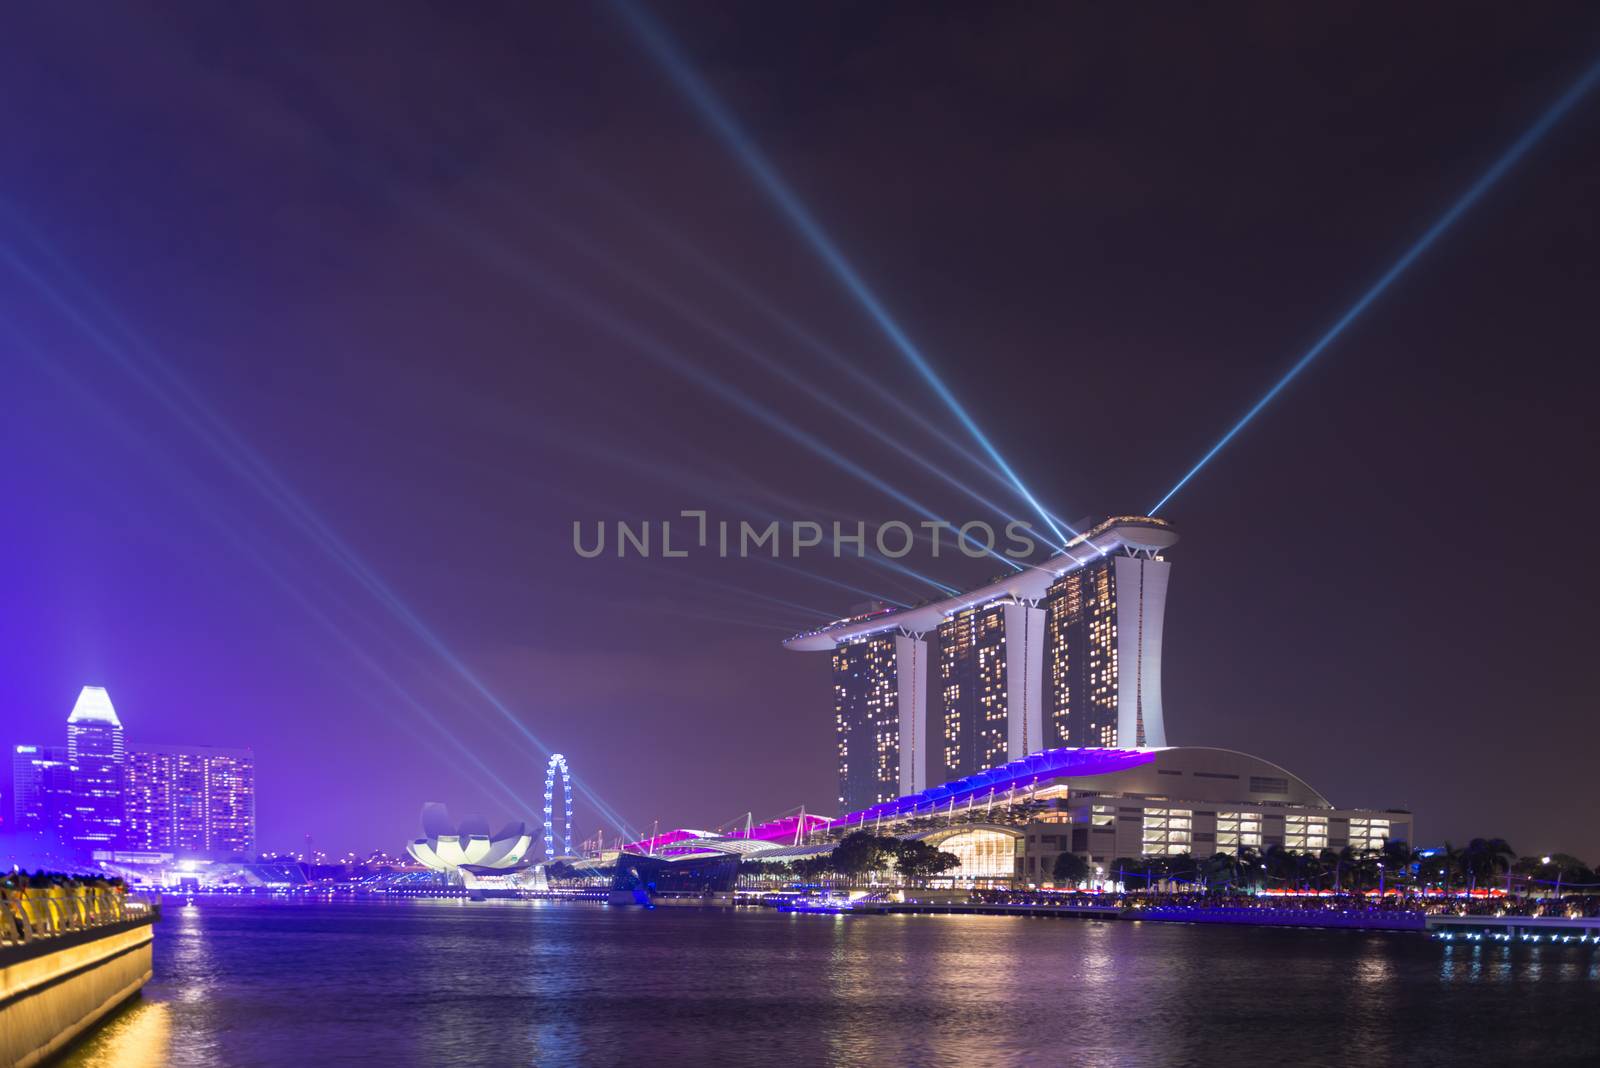 Singapore Marina Bay Sands Resort illumination at night by iryna_rasko